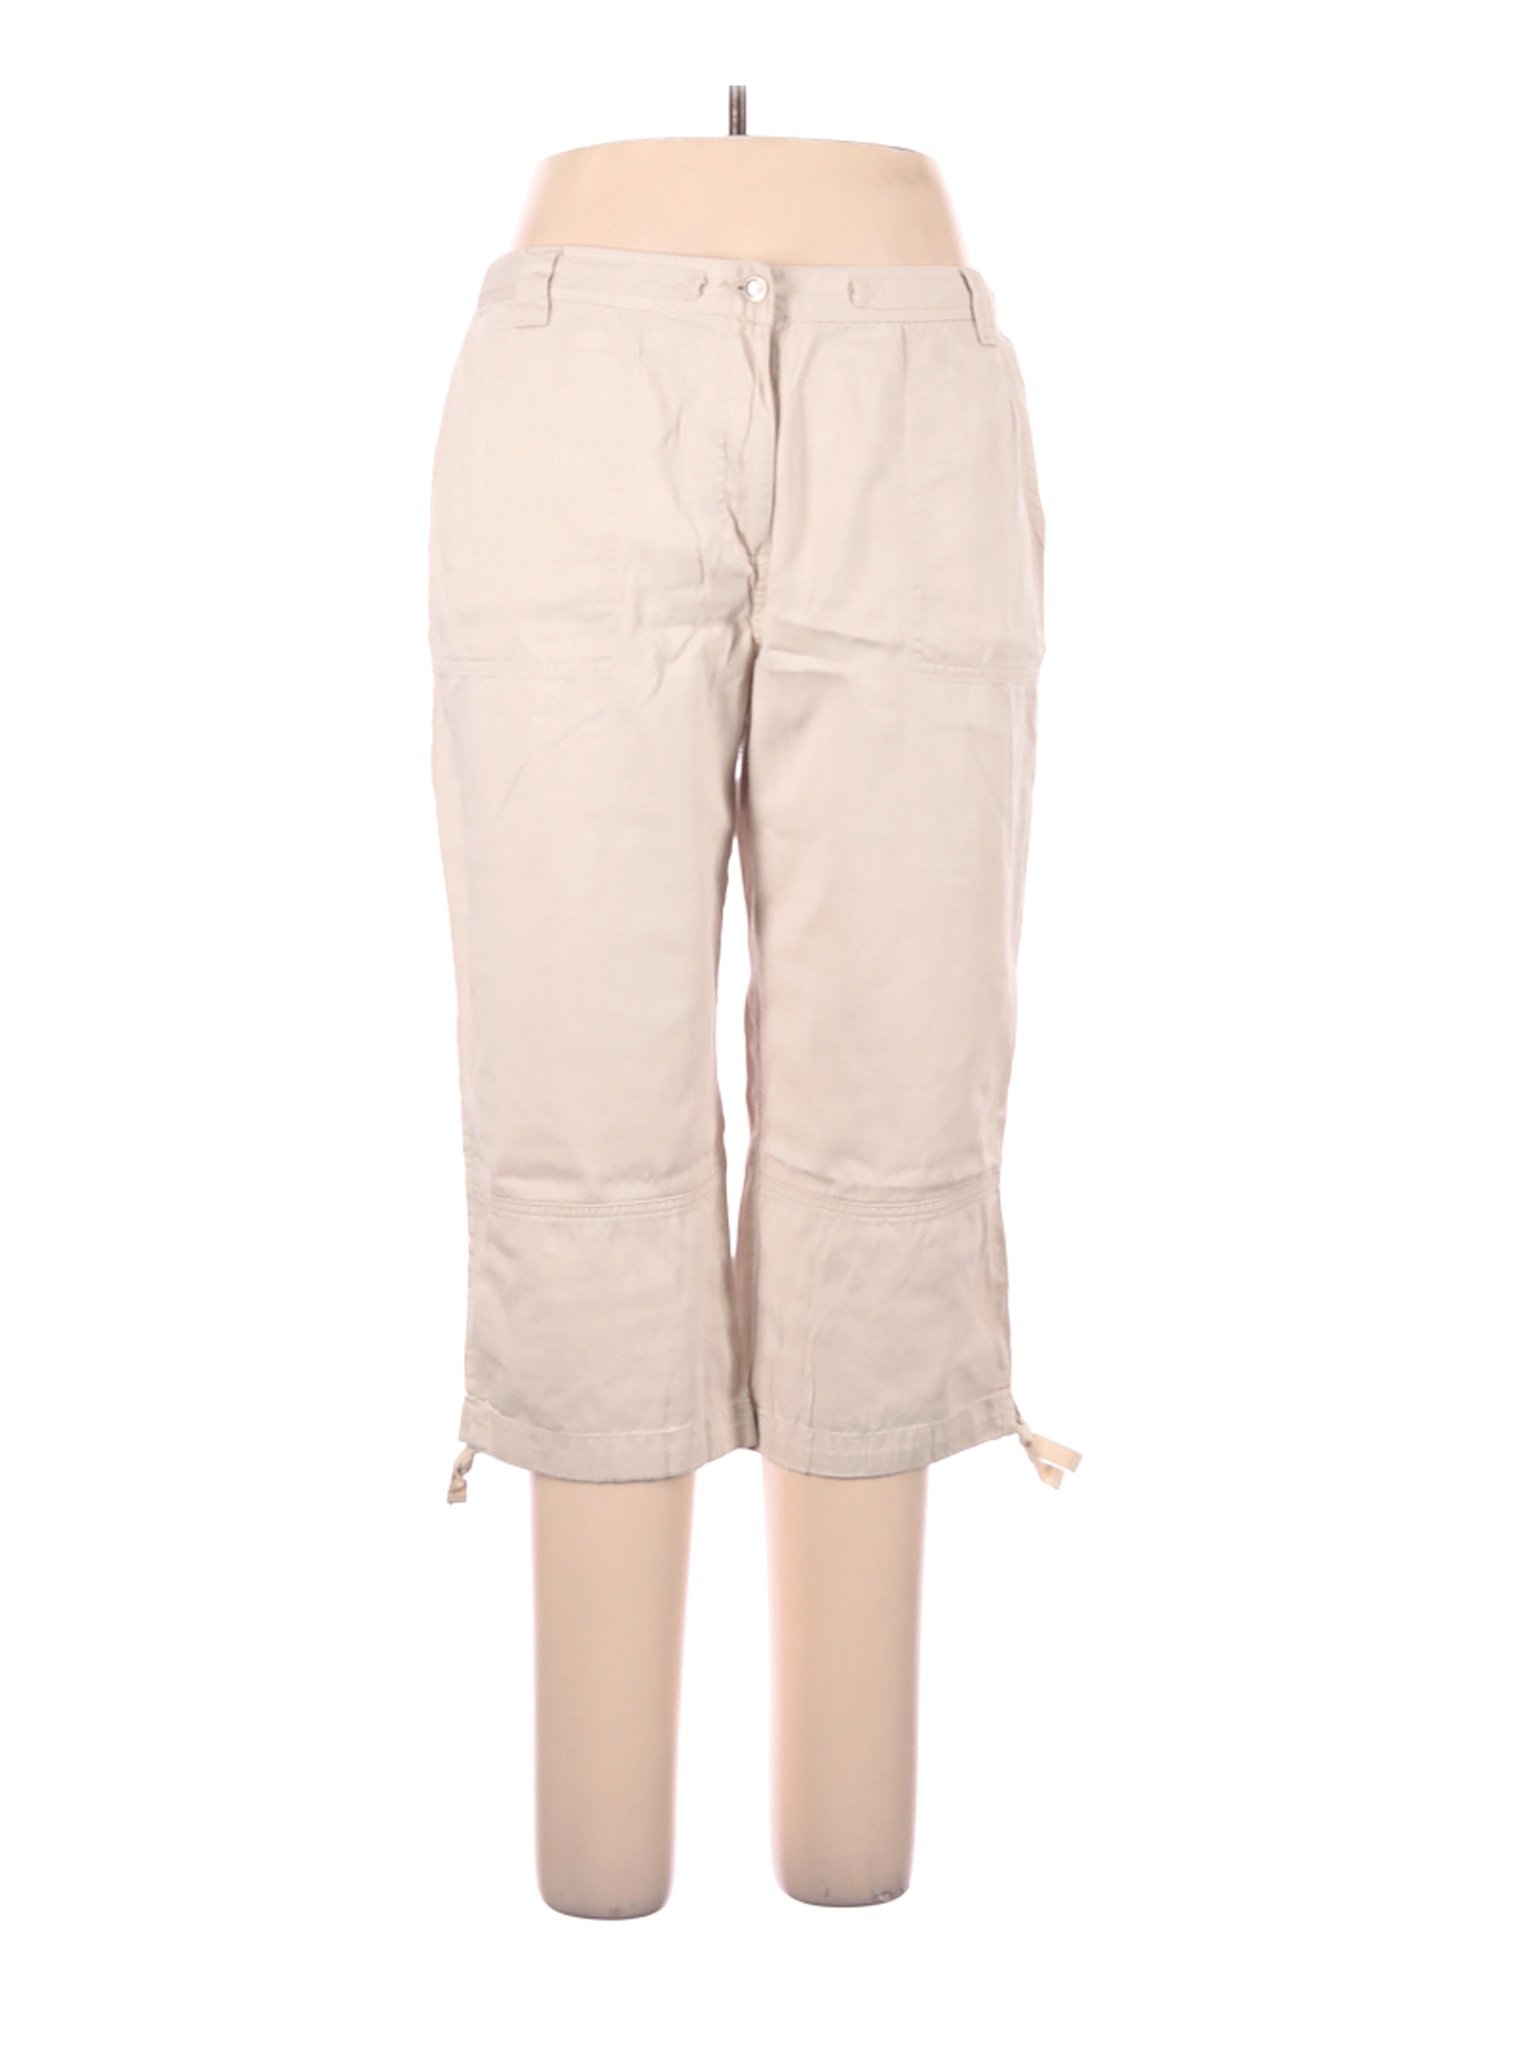 Style&Co Women Ivory Linen Pants 14 Petites | eBay